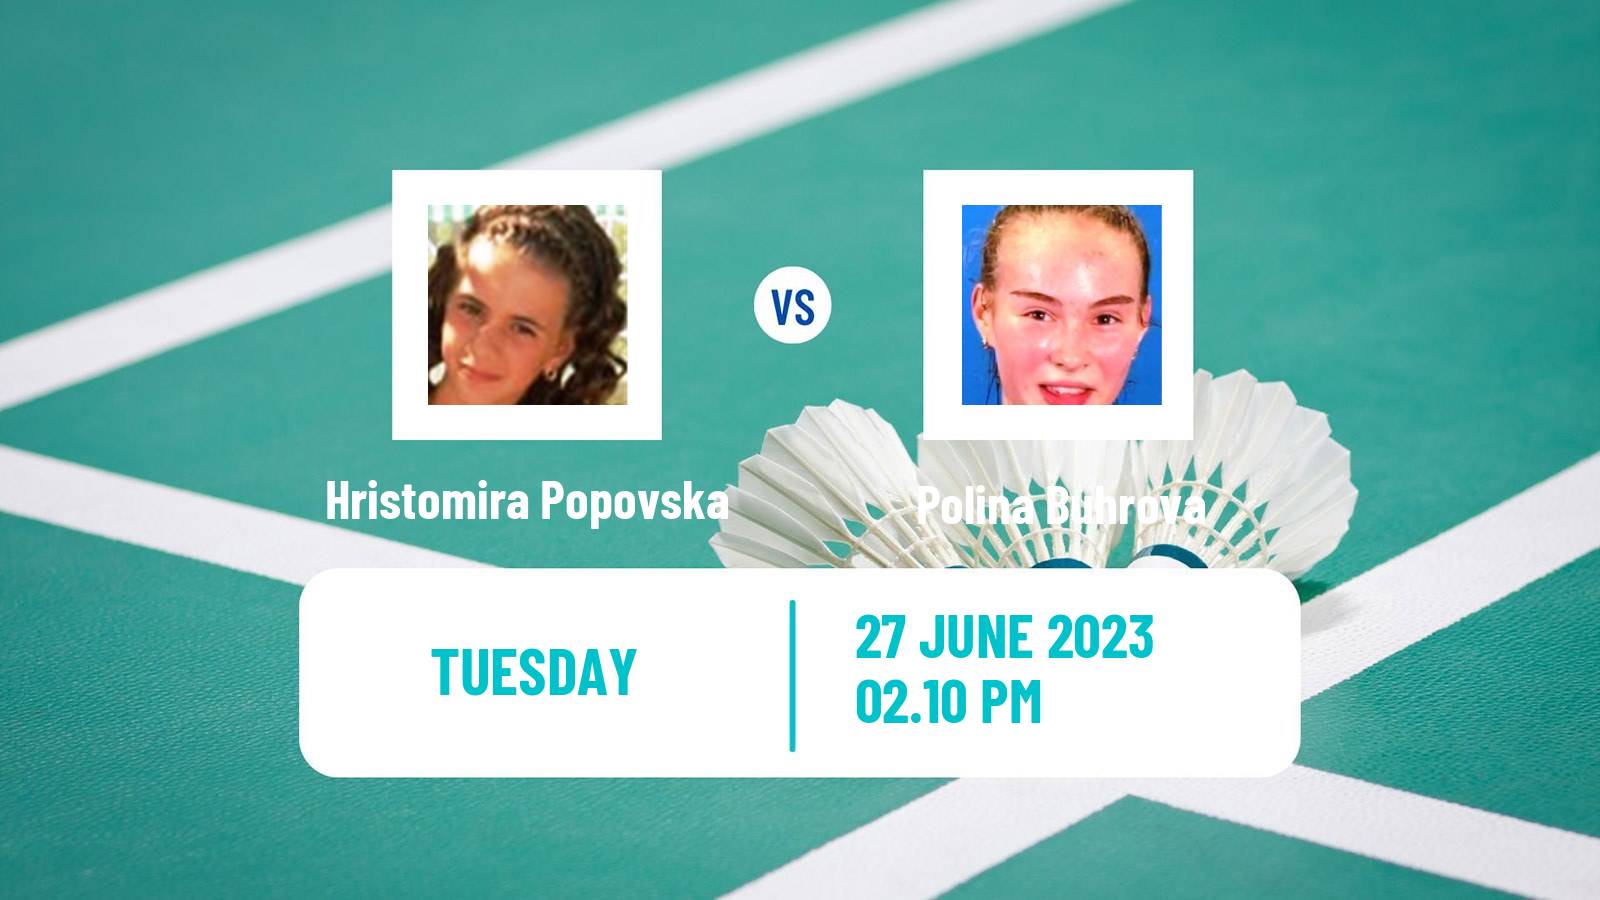 Badminton BWF European Games Women Hristomira Popovska - Polina Buhrova